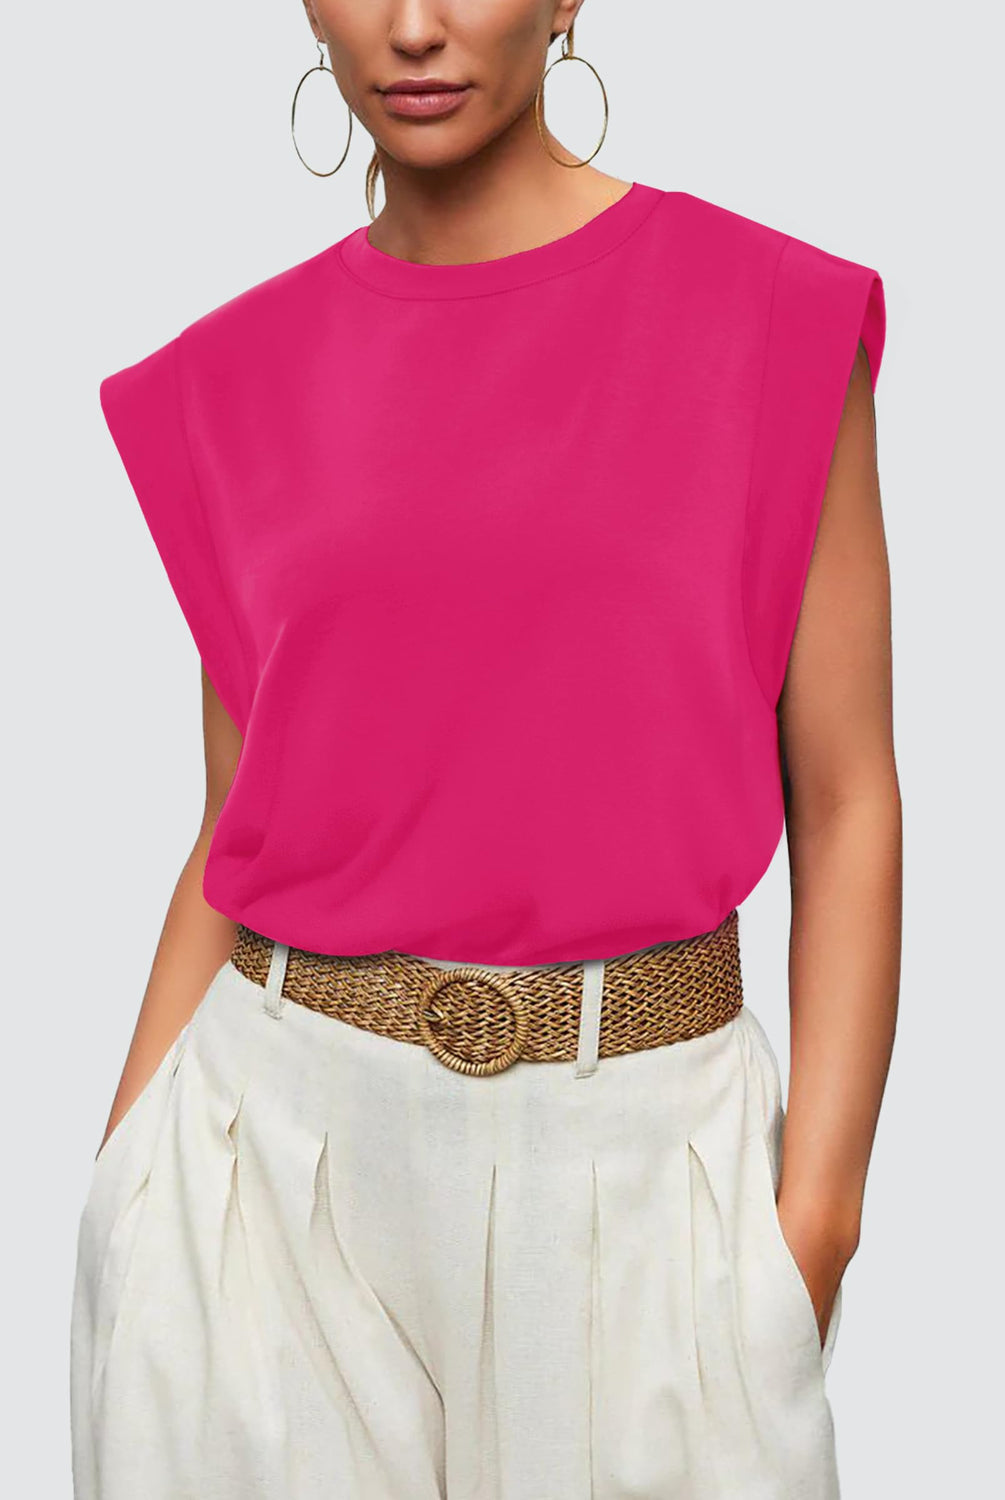 Hot Pink View. Round Neck Cap Sleeve Tank-Krush Kandy, Women's Online Fashion Boutique Located in Phoenix, Arizona (Scottsdale Area)